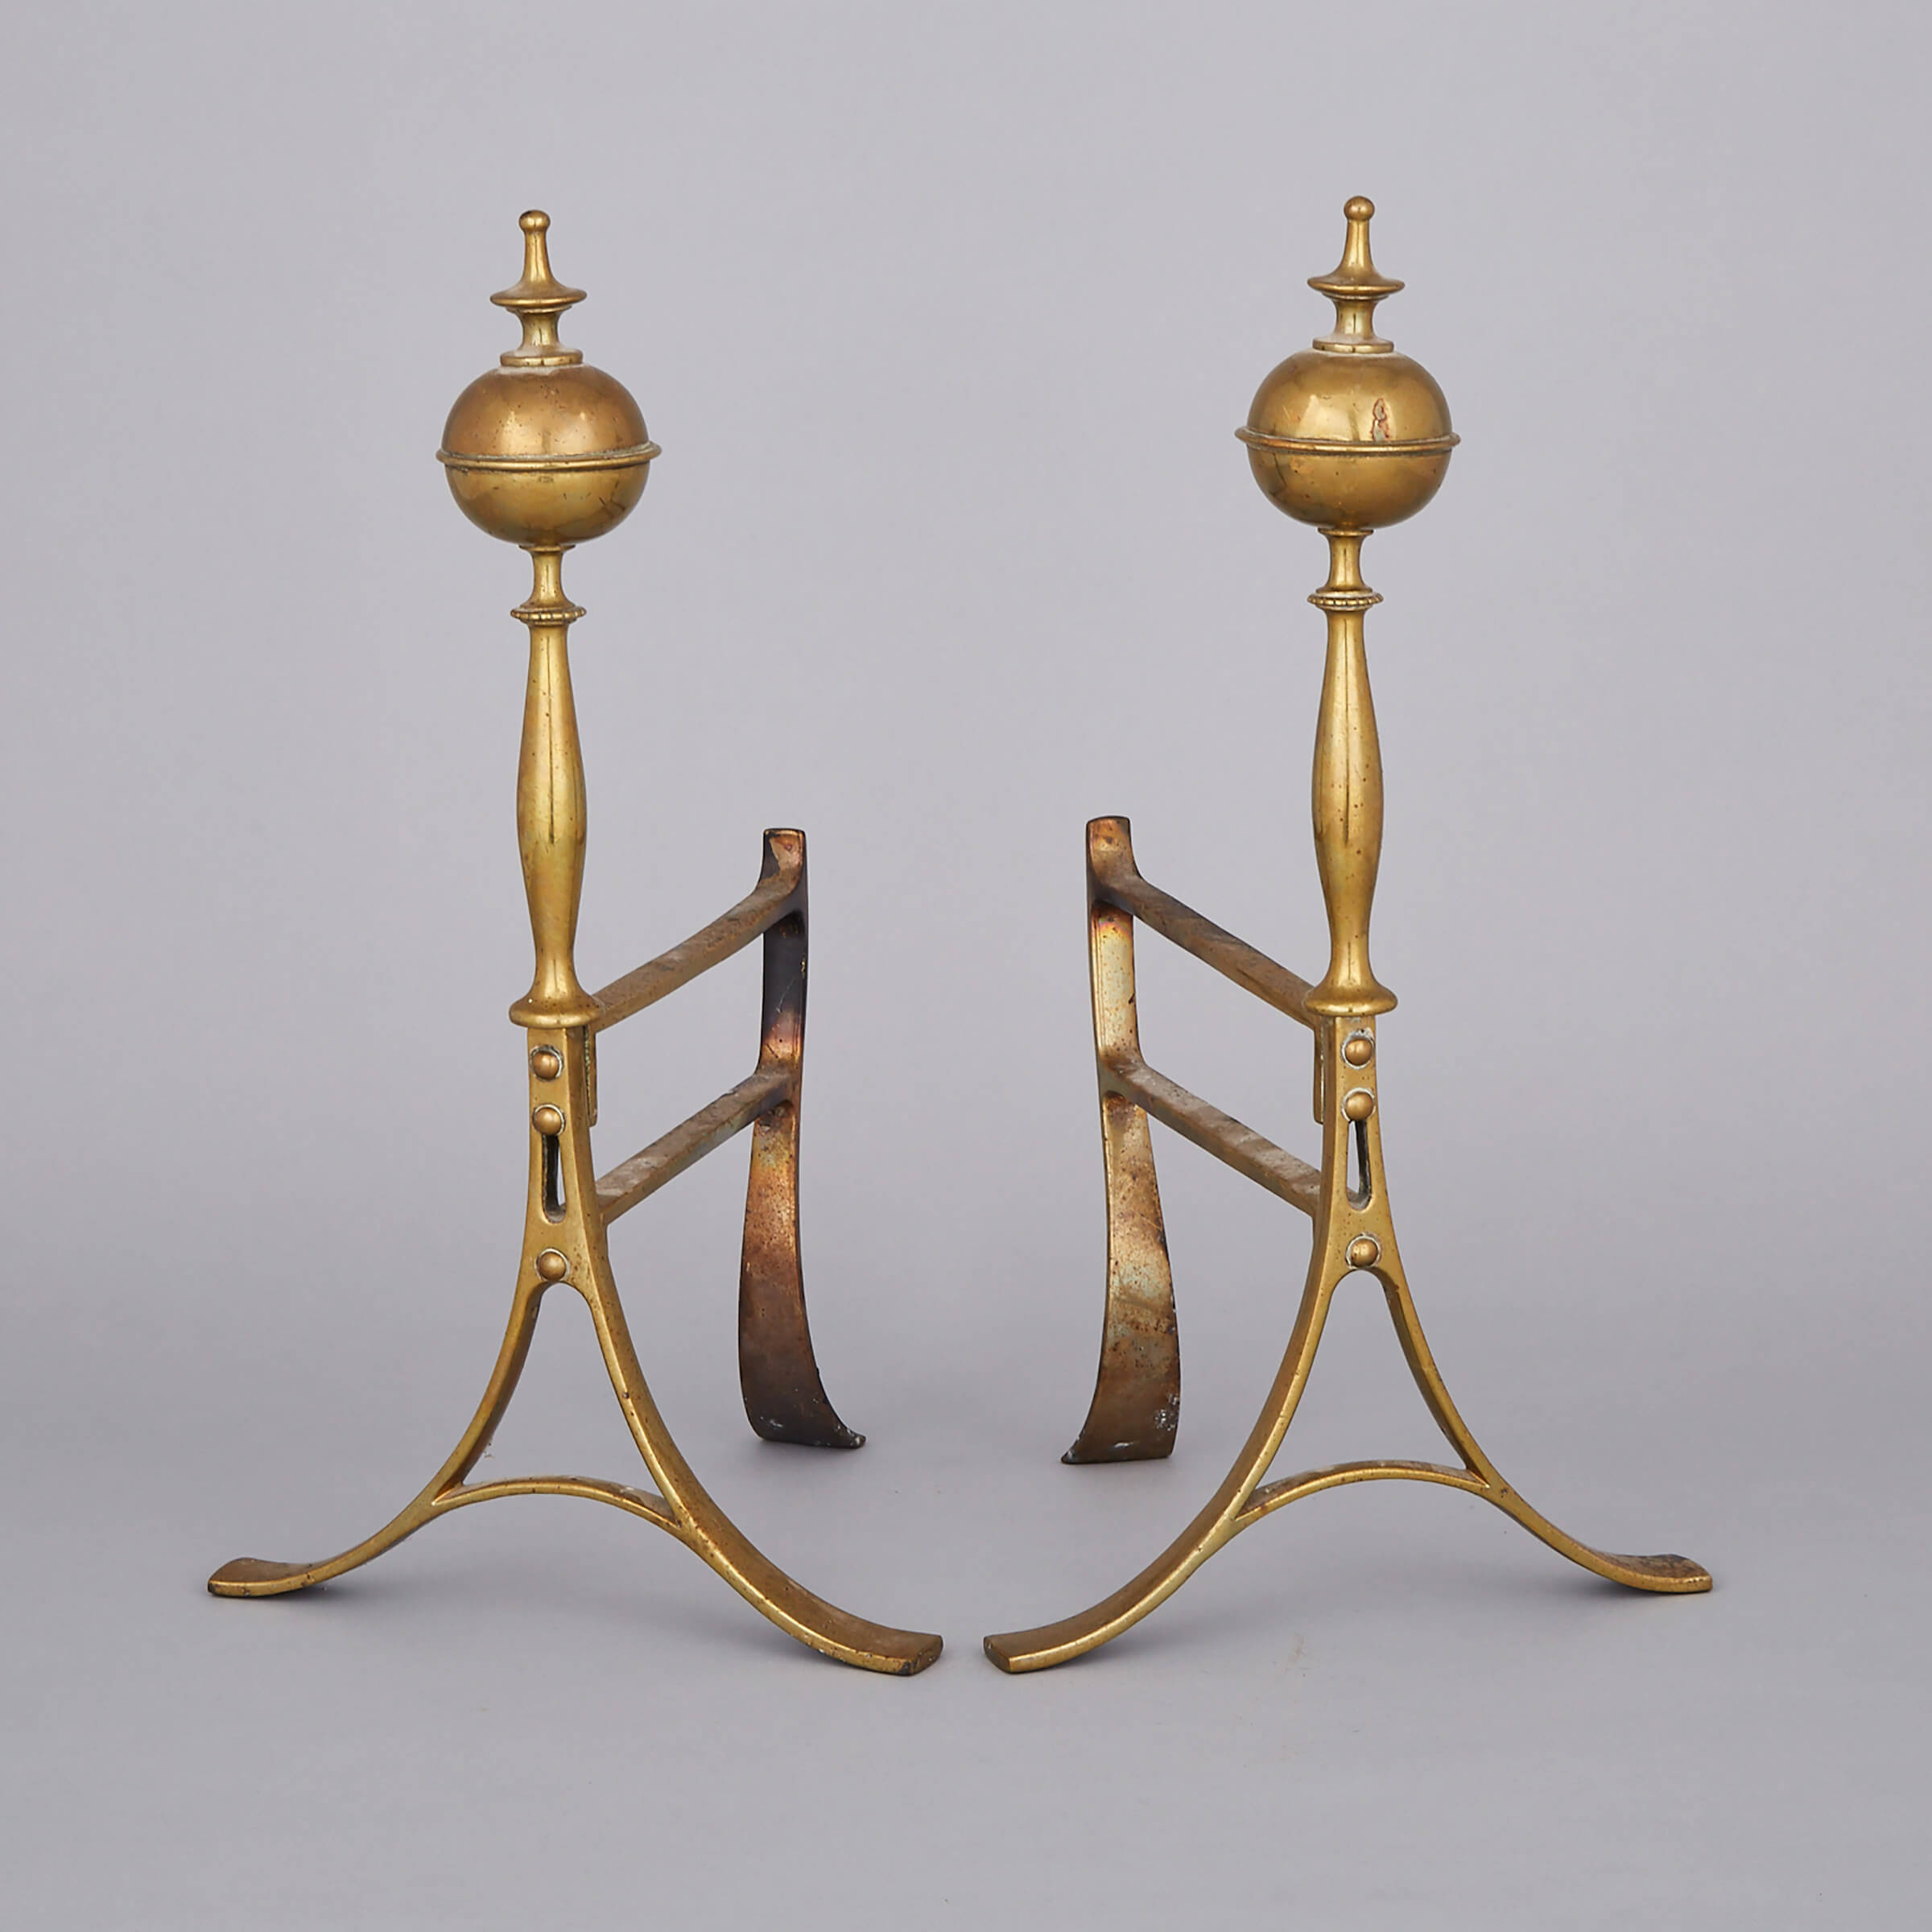 Pair of Art Nouveau Brass Andirons, c.1900